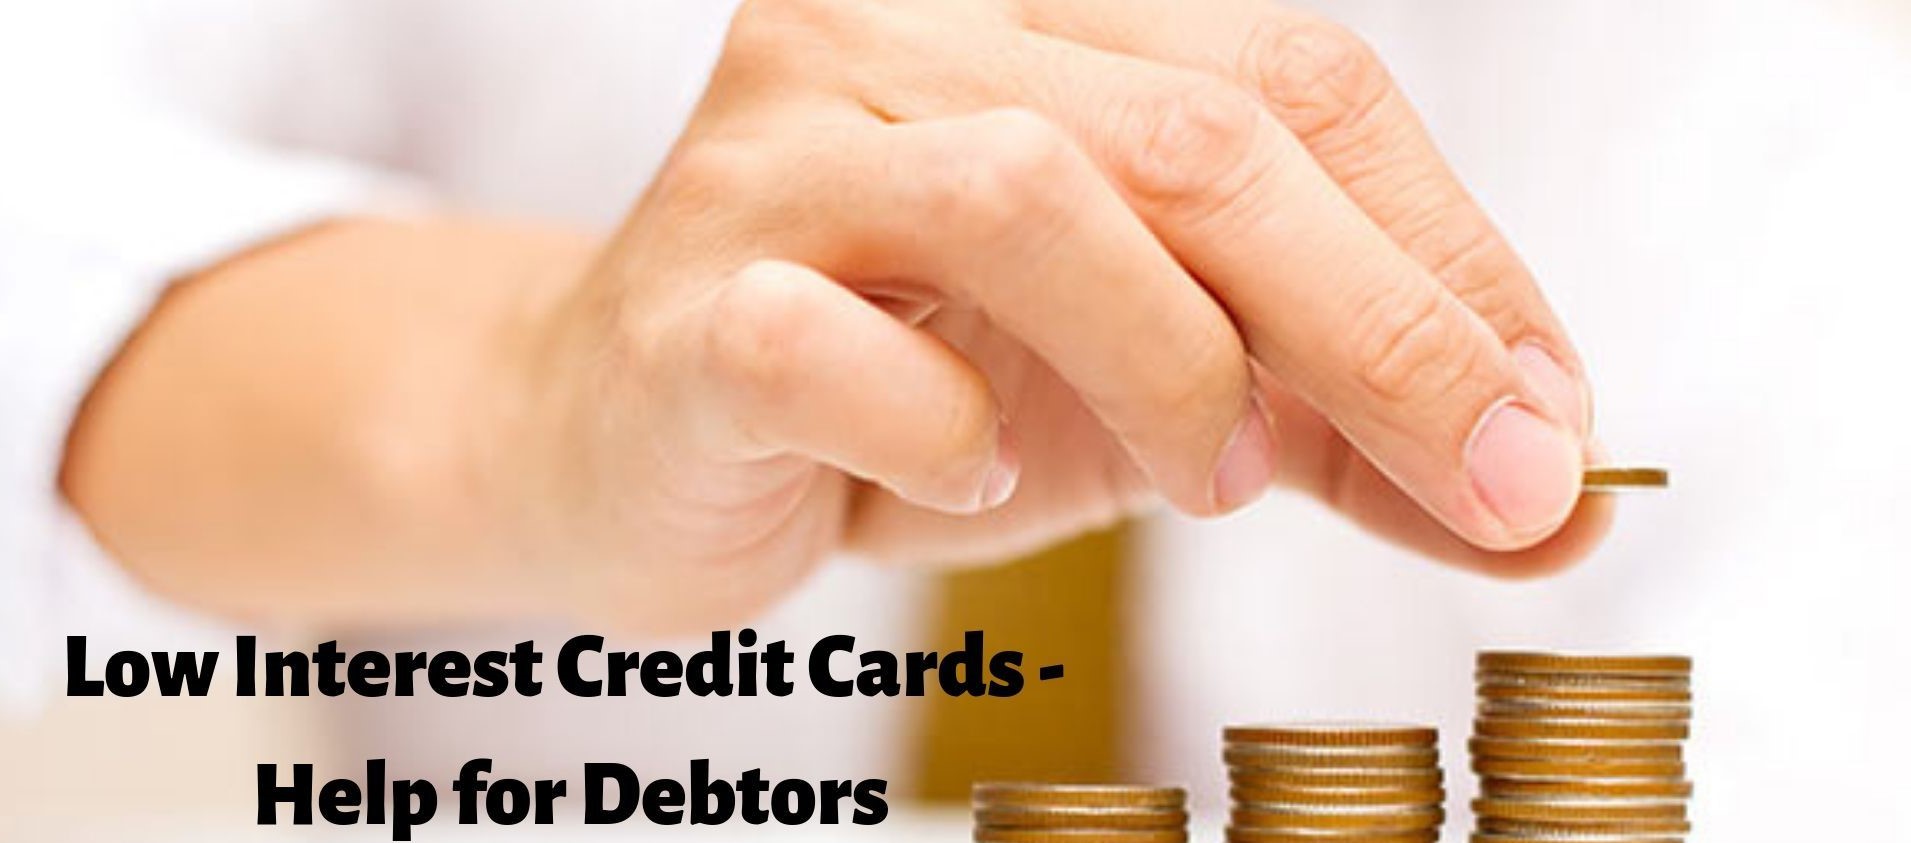 Low Interest Credit Cards - Help for Debtors